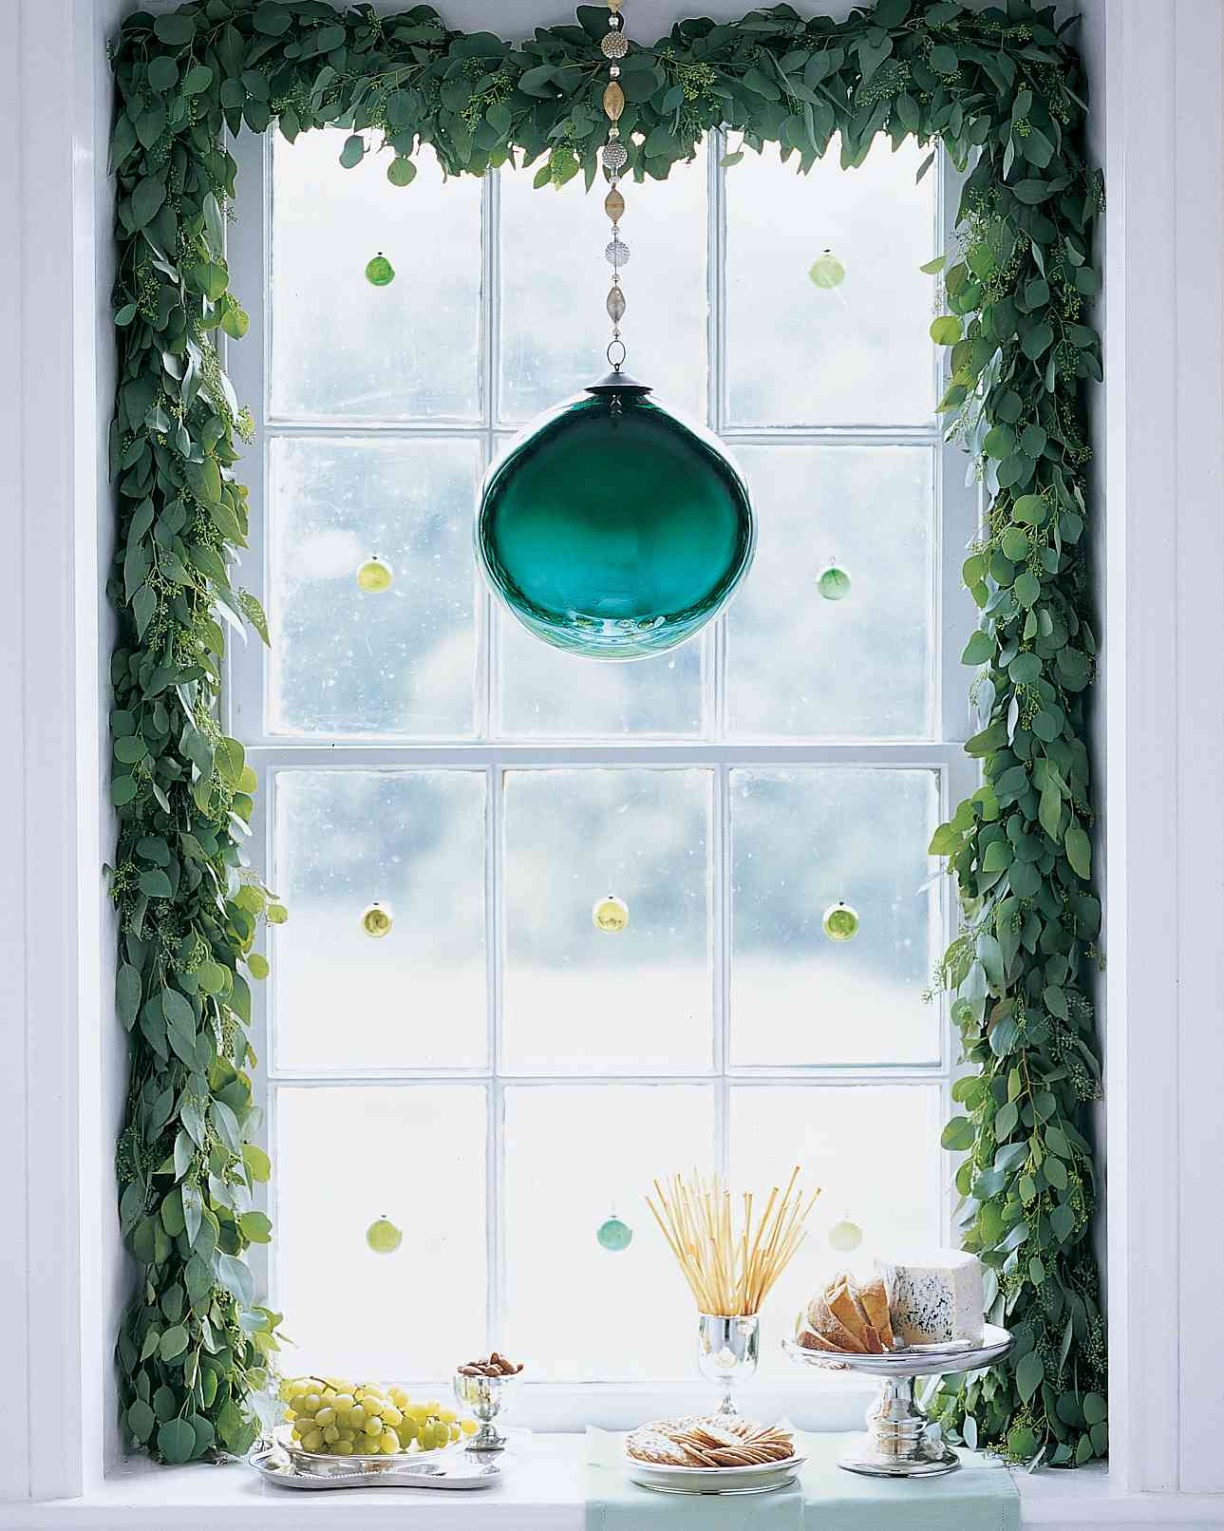 window decoration ideas Niche Utama Home The Best Window Decorations for Christmas